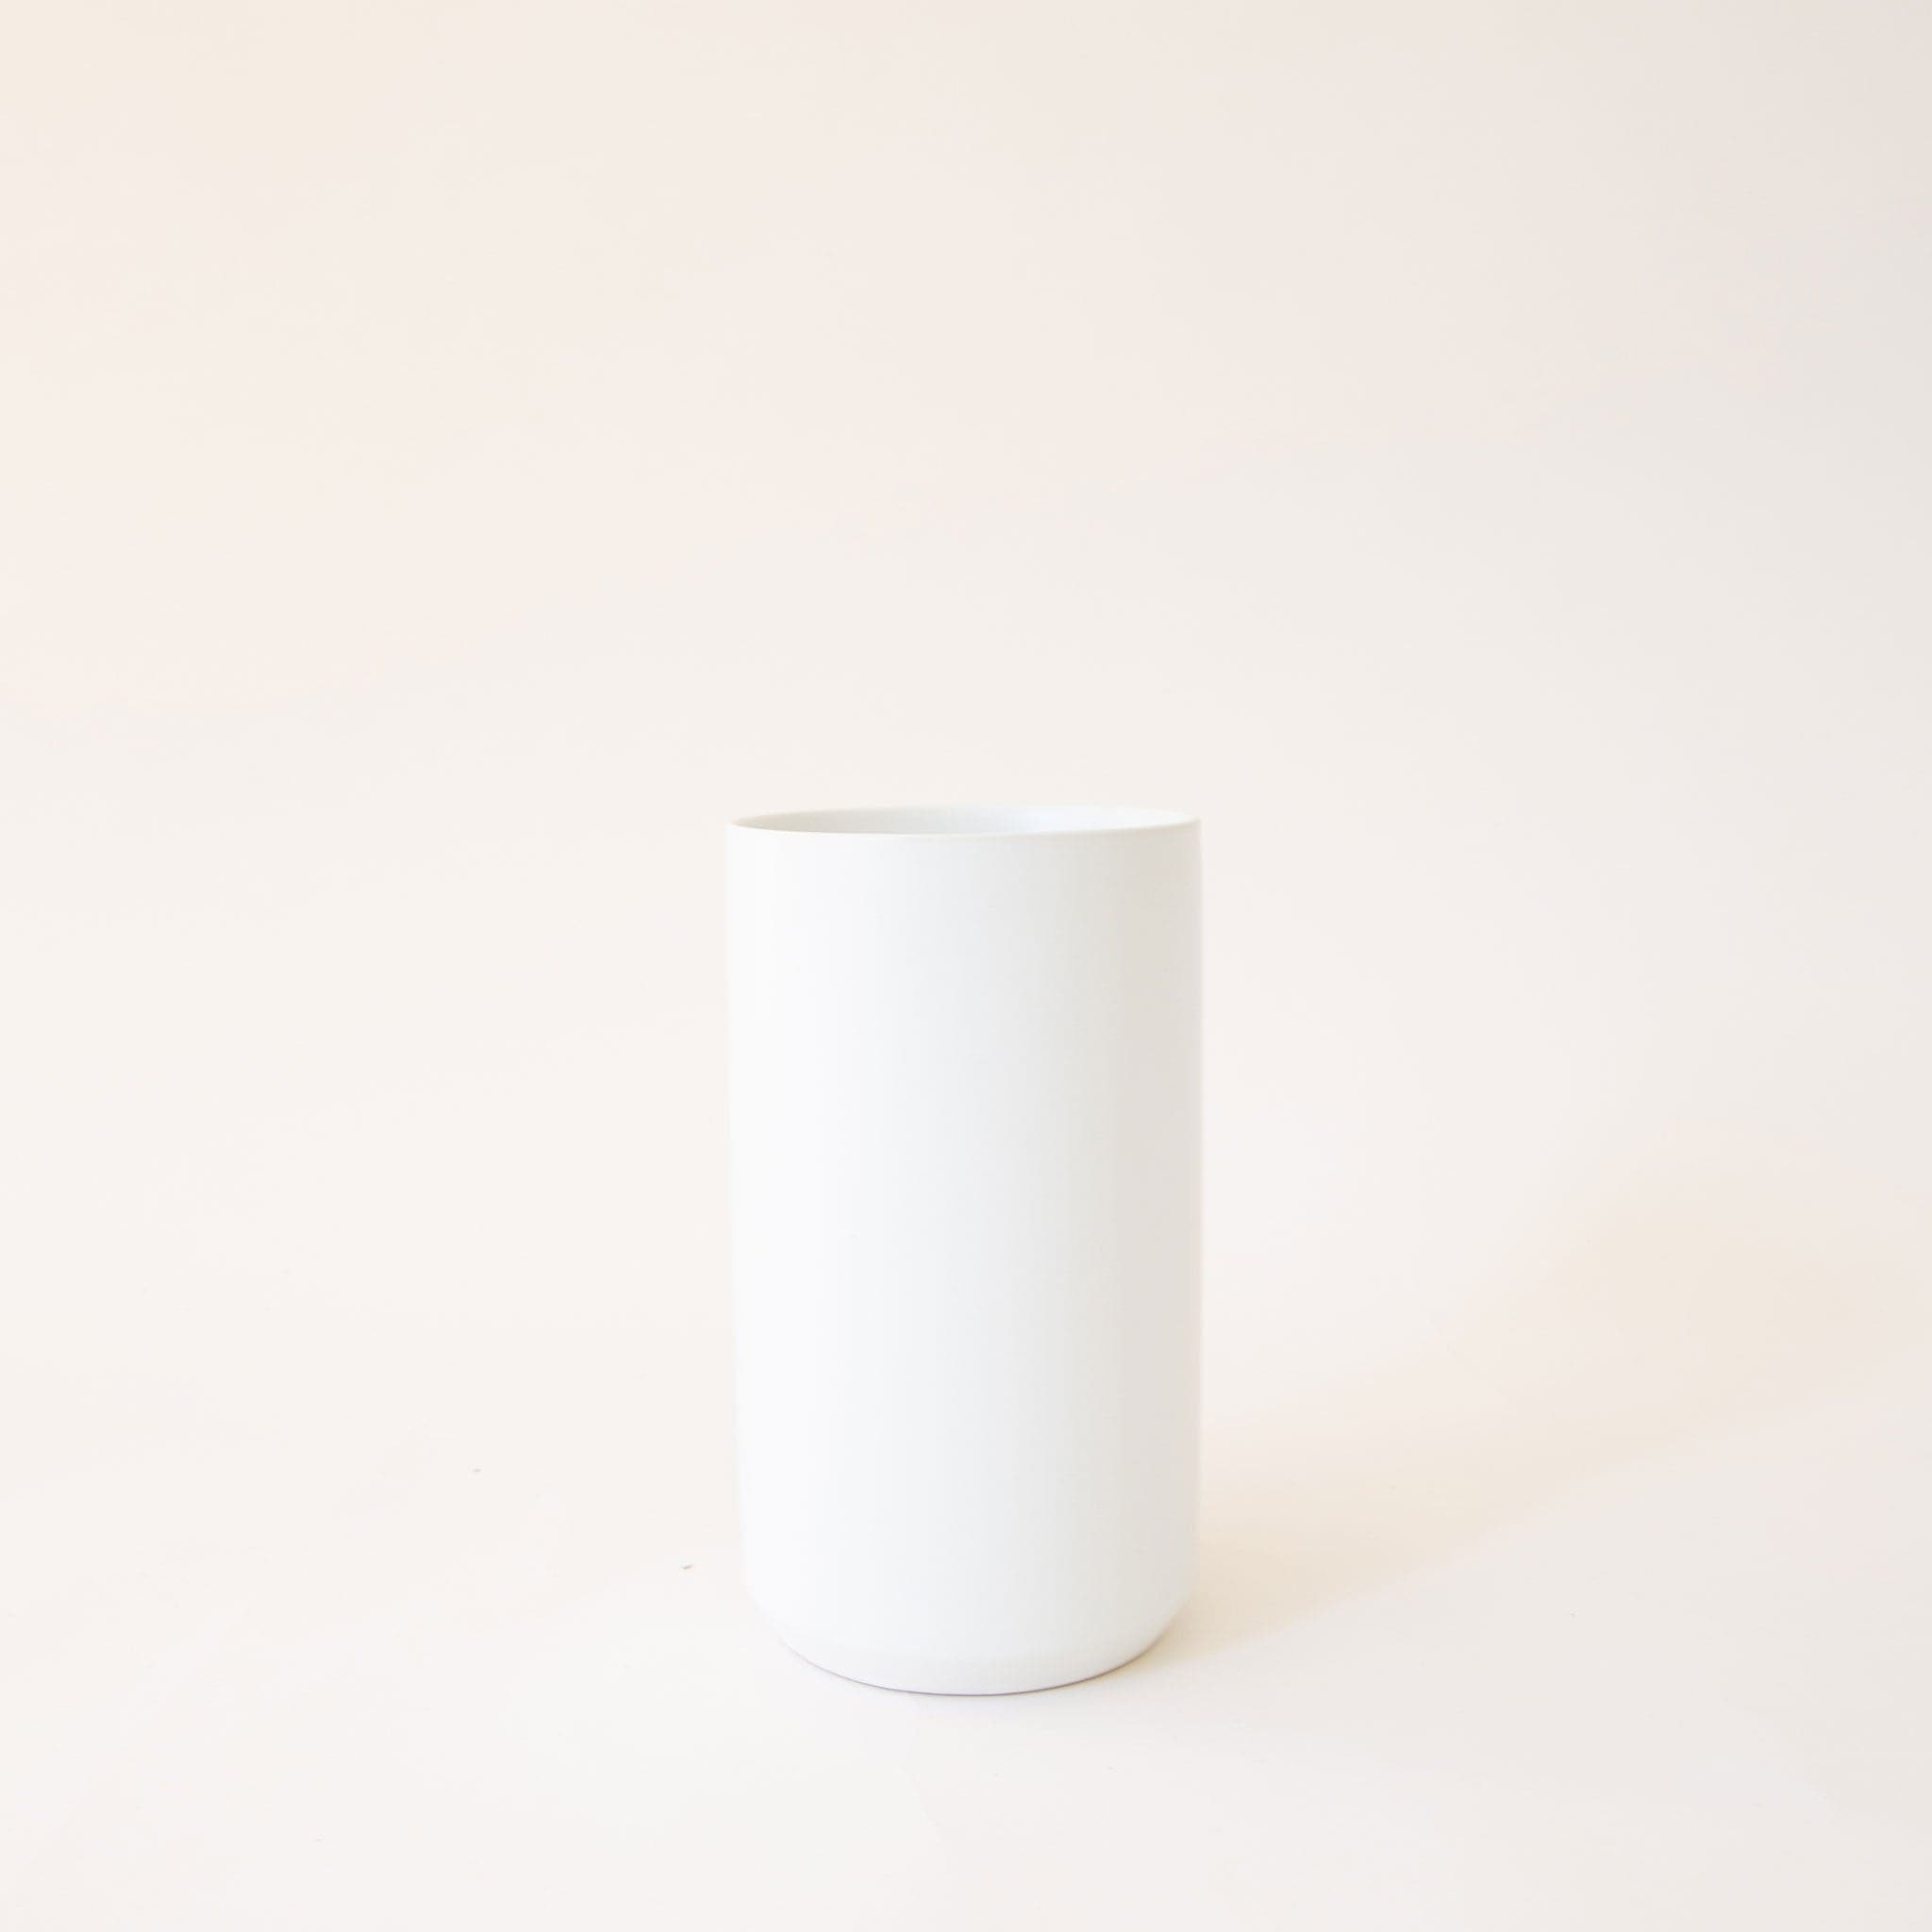 Narrow white cylinder vase. The vase lays against a blush pink background.